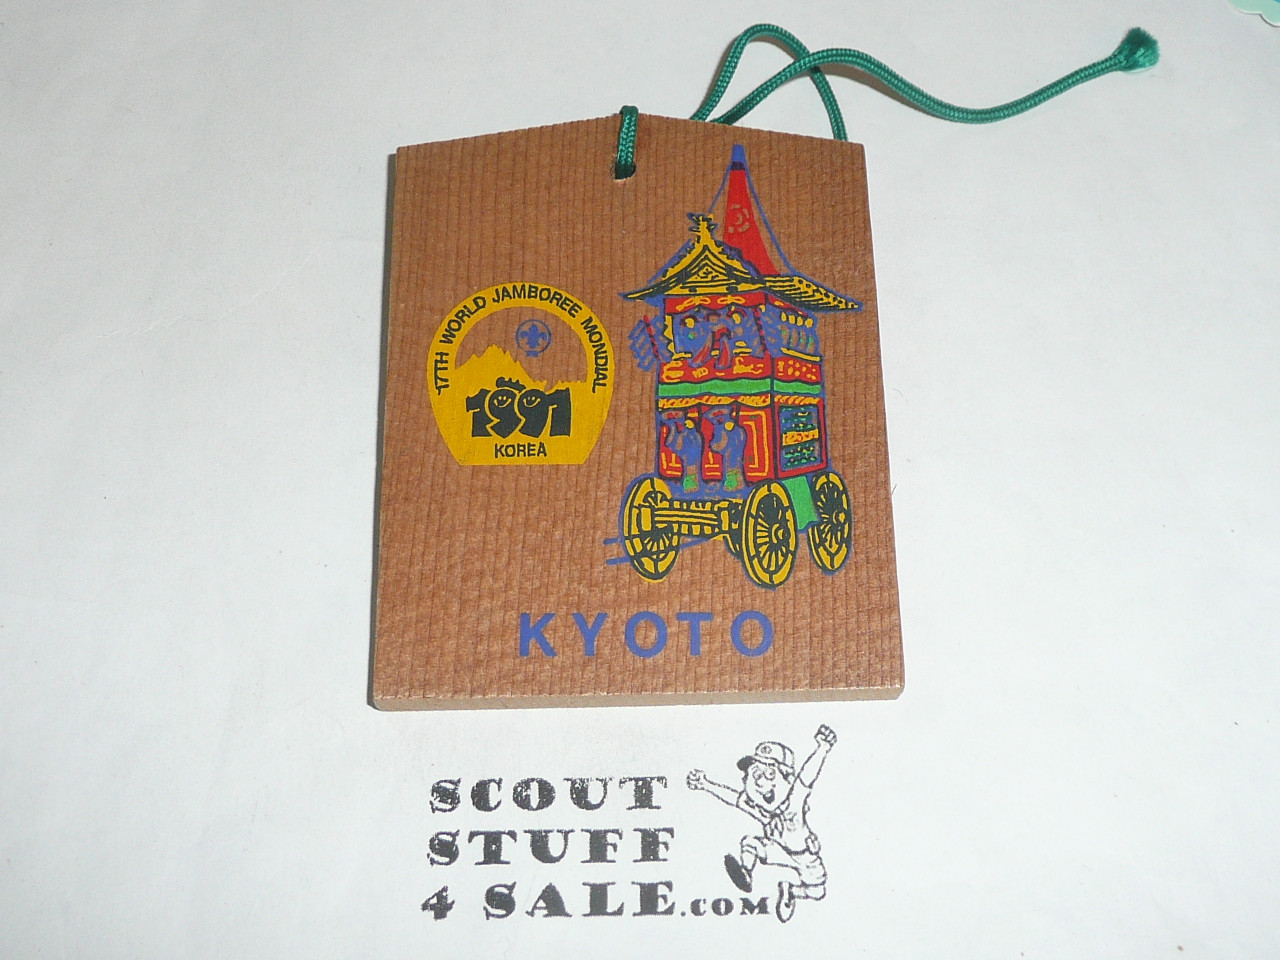 1991 Boy Scout World Jamboree Kyoto Contingent item